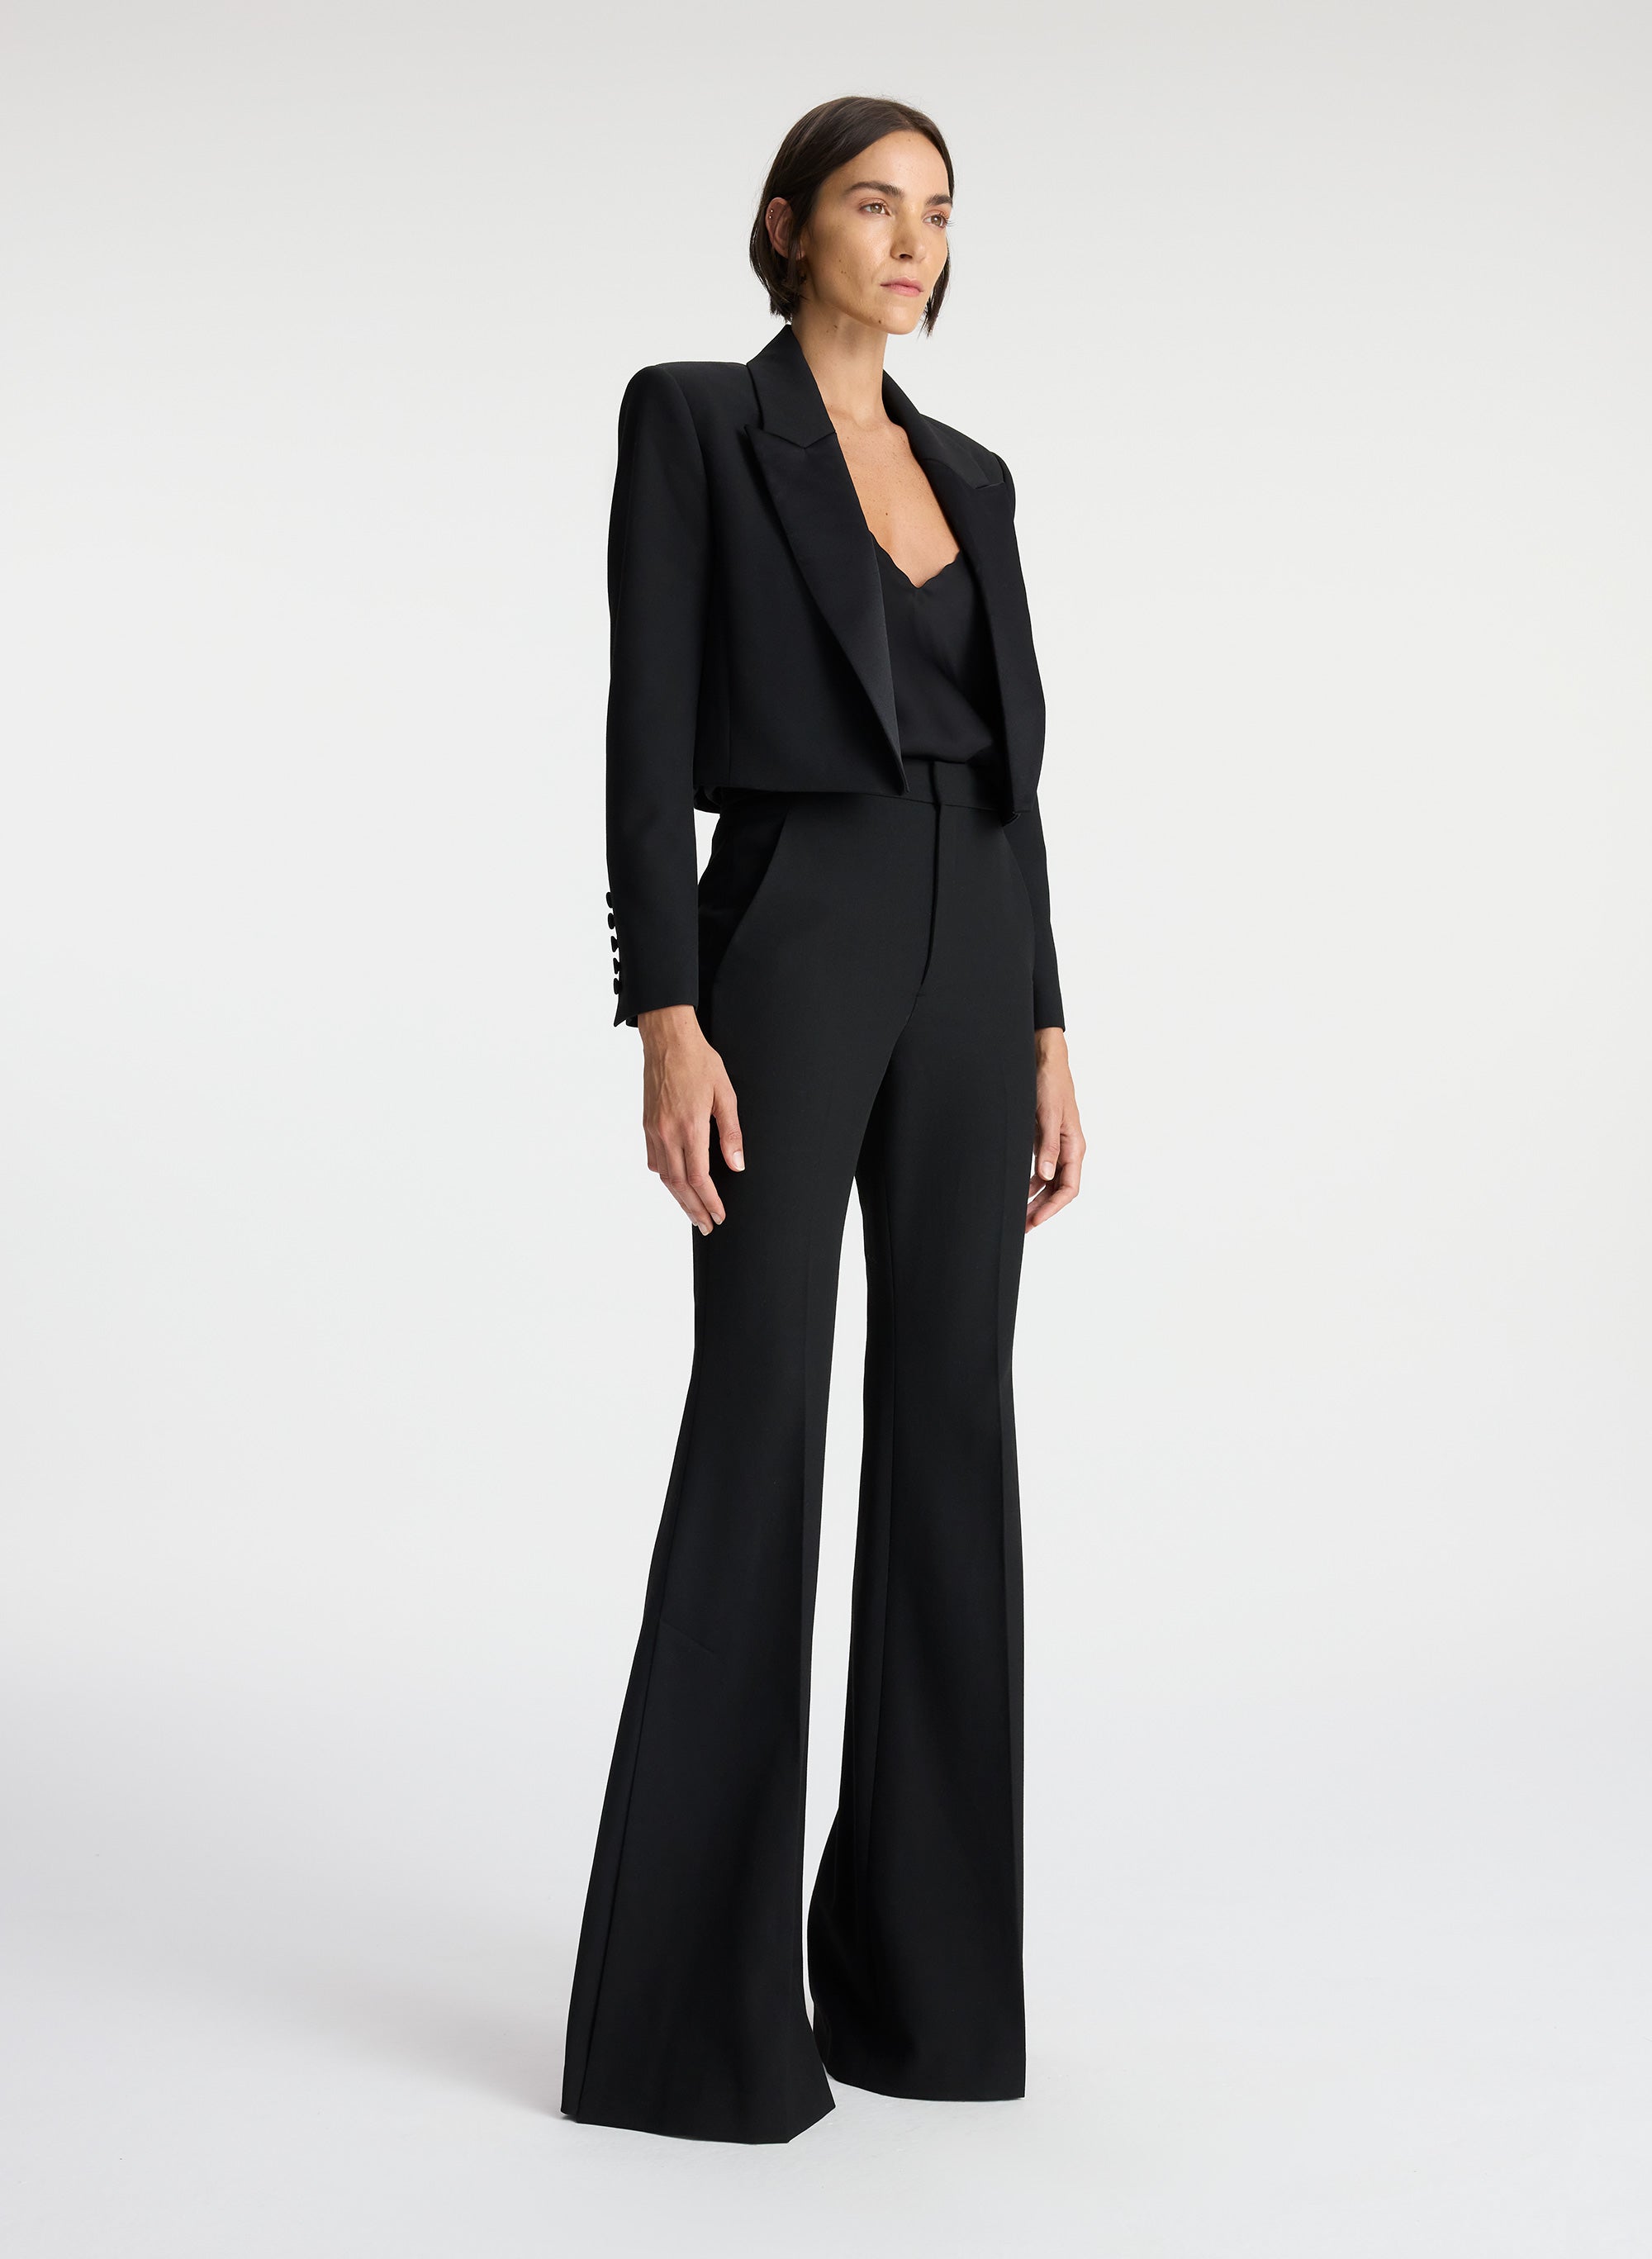 Womens Ladies Open Front Blazer Waistcoat Tuxedo Collared Sleeveless Jacket  Coat | eBay